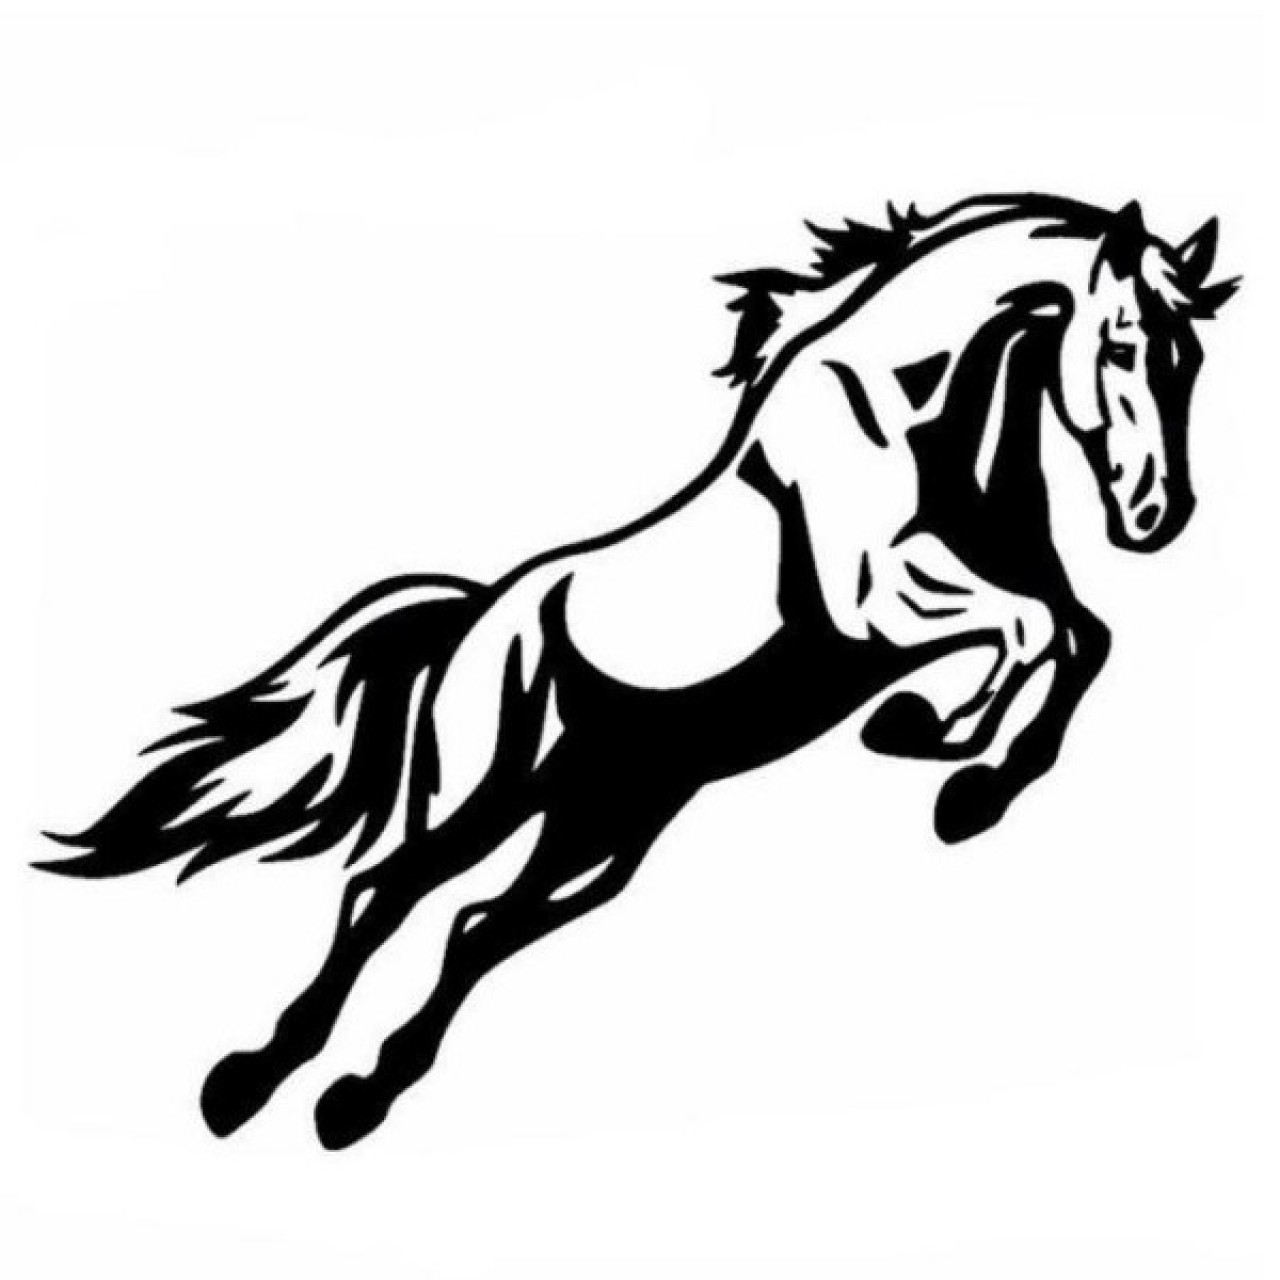 Horse Jumping Car Sticker - Black